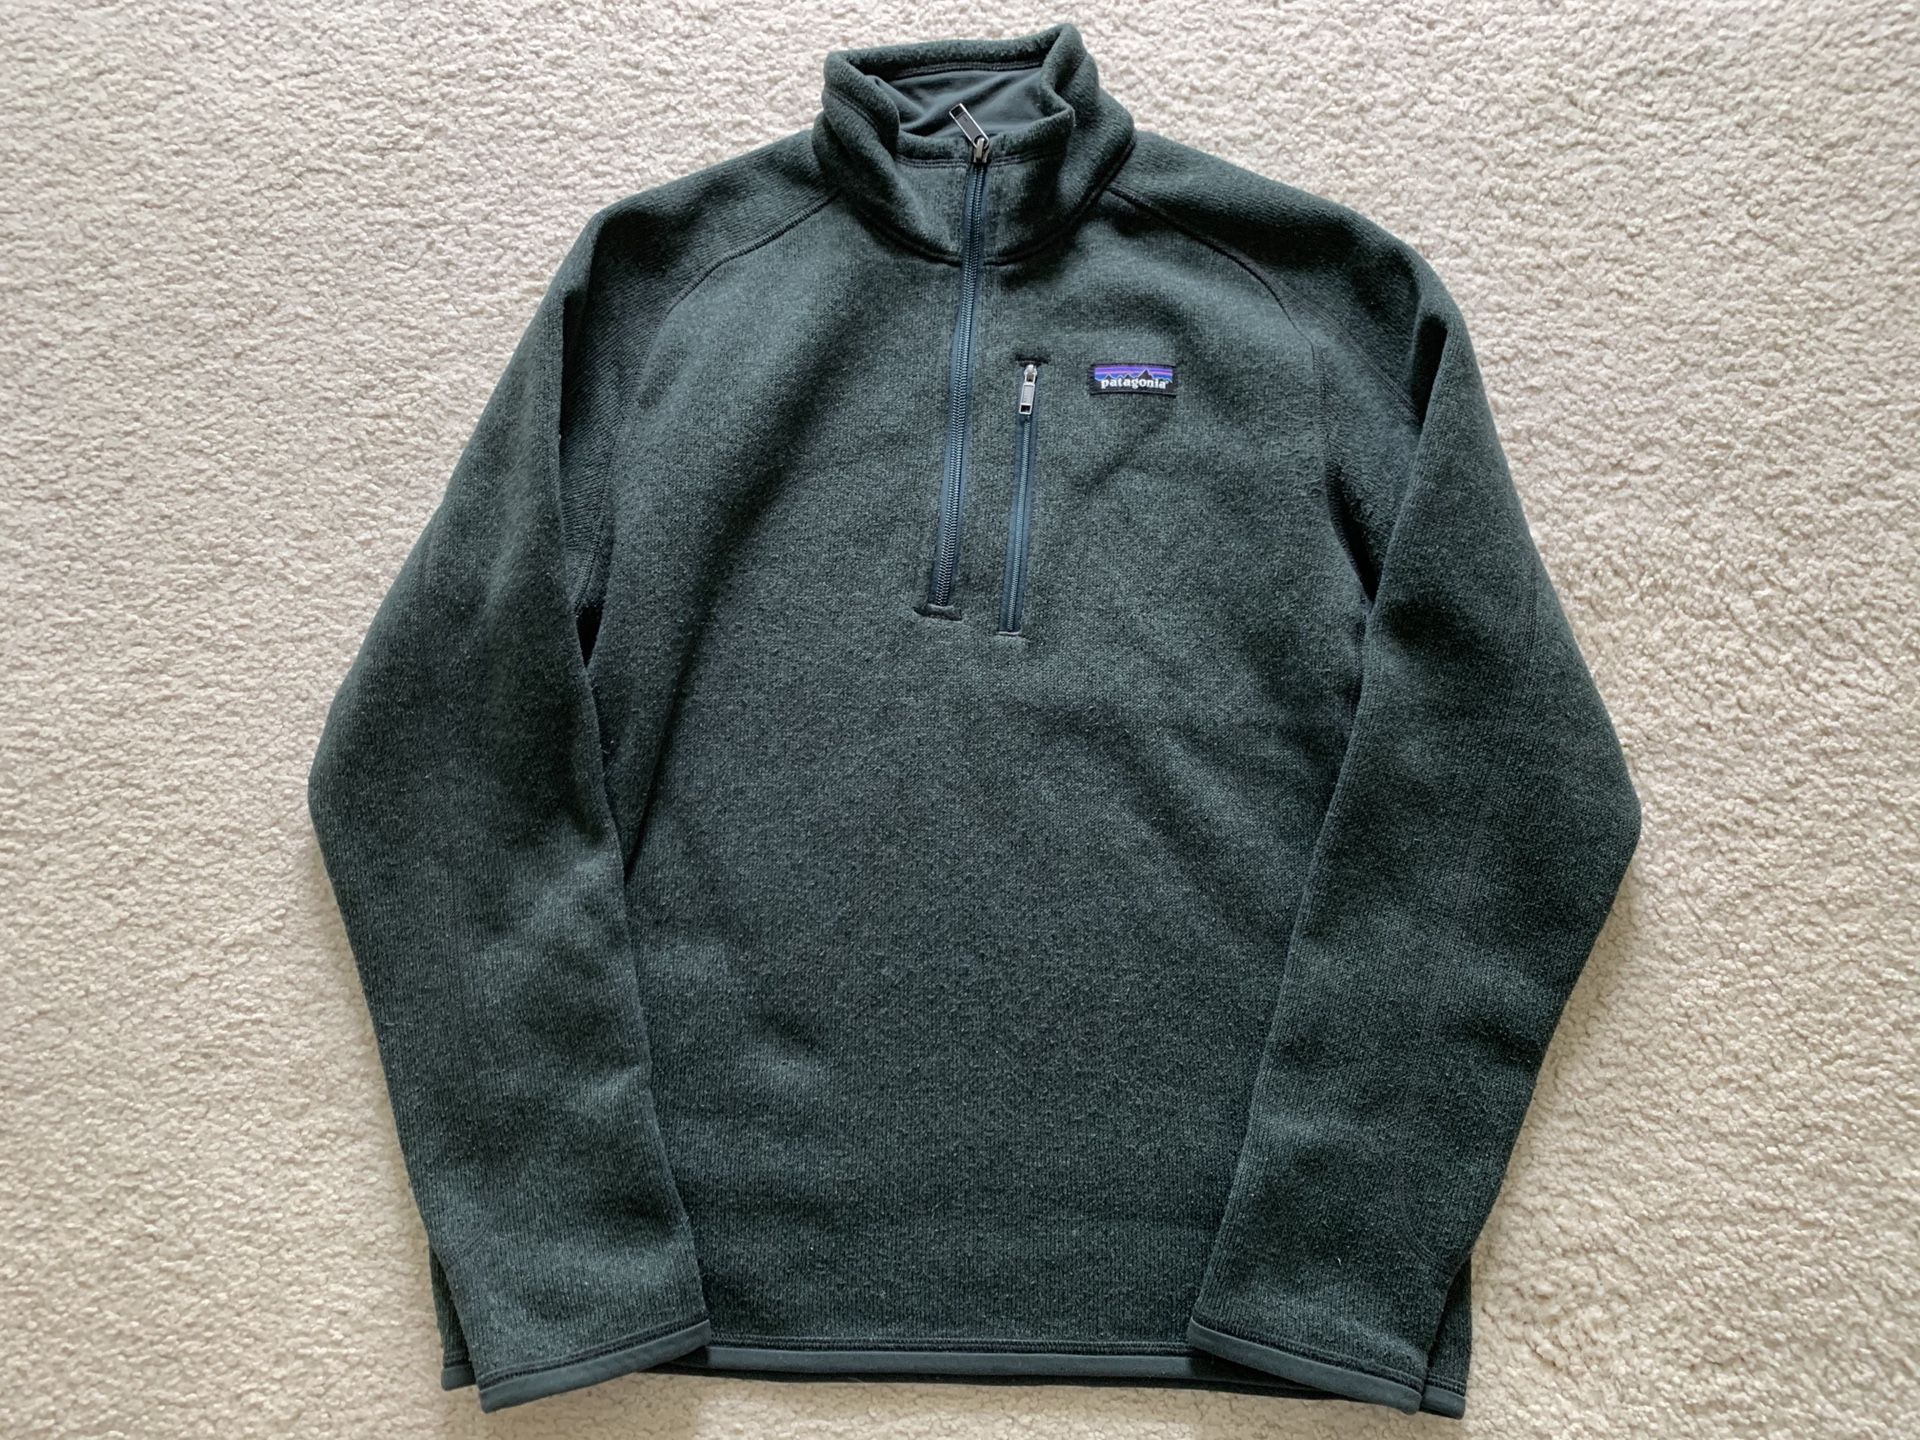 Men’s Patagonia better sweater size medium like new